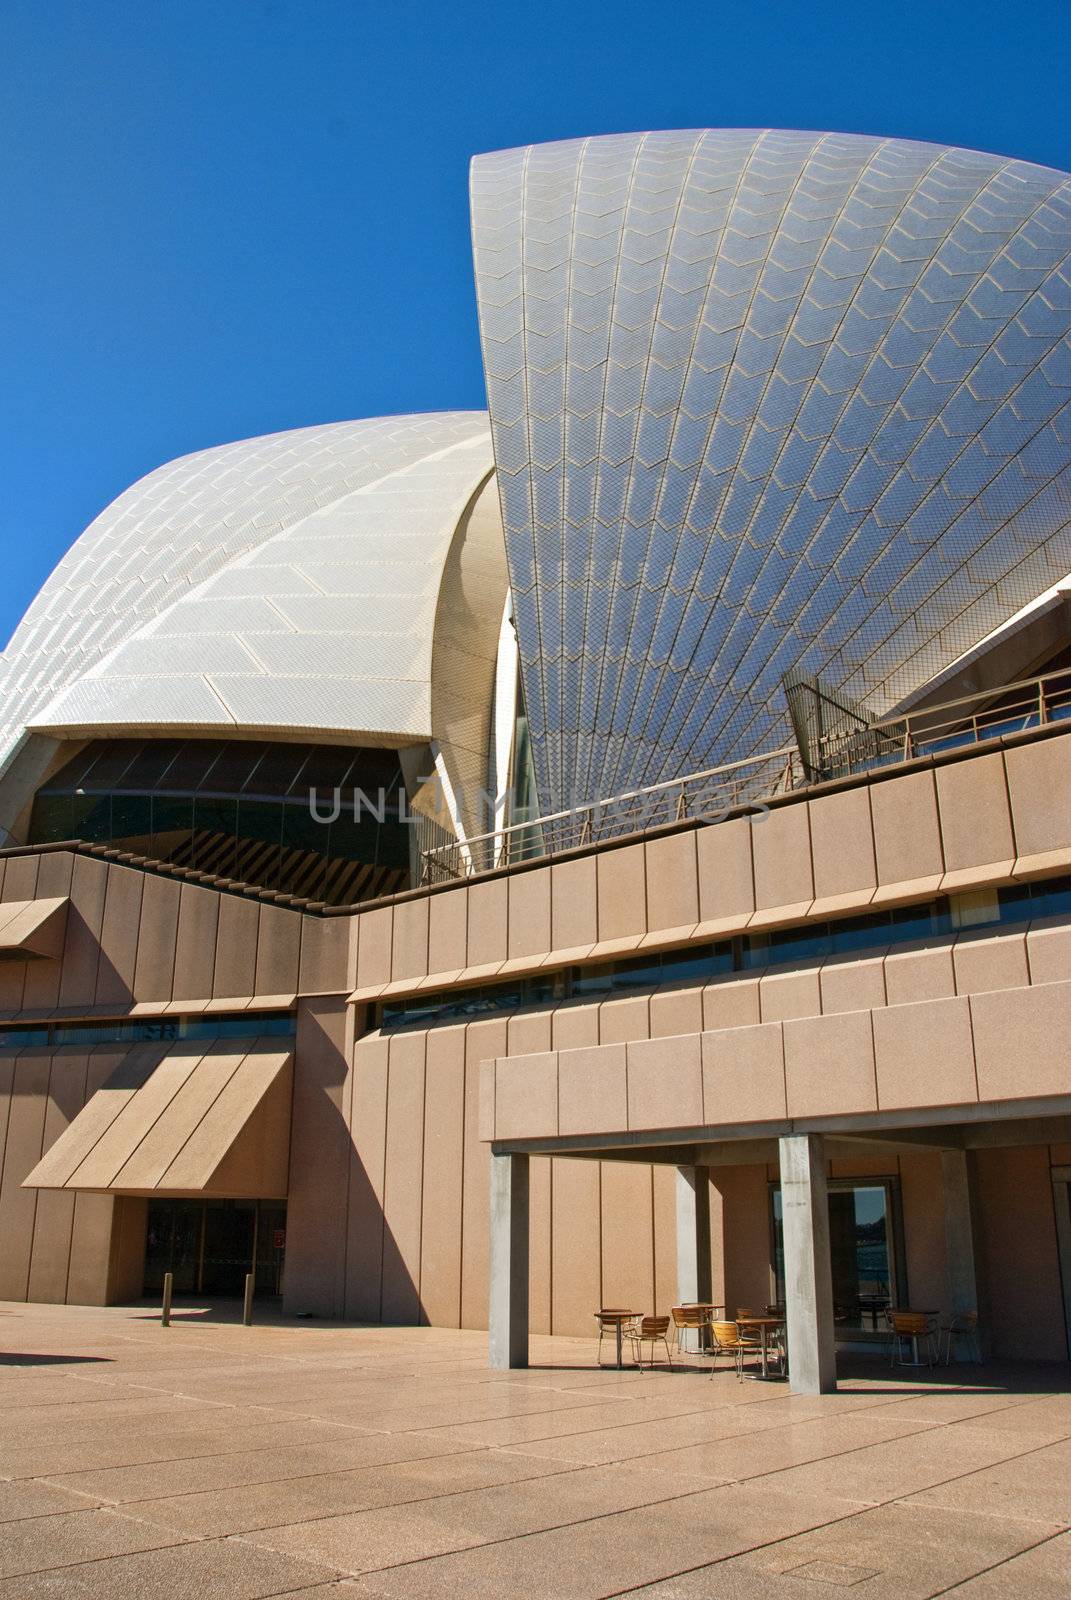 Detail of the Sydney Opera House, Australia, 2009